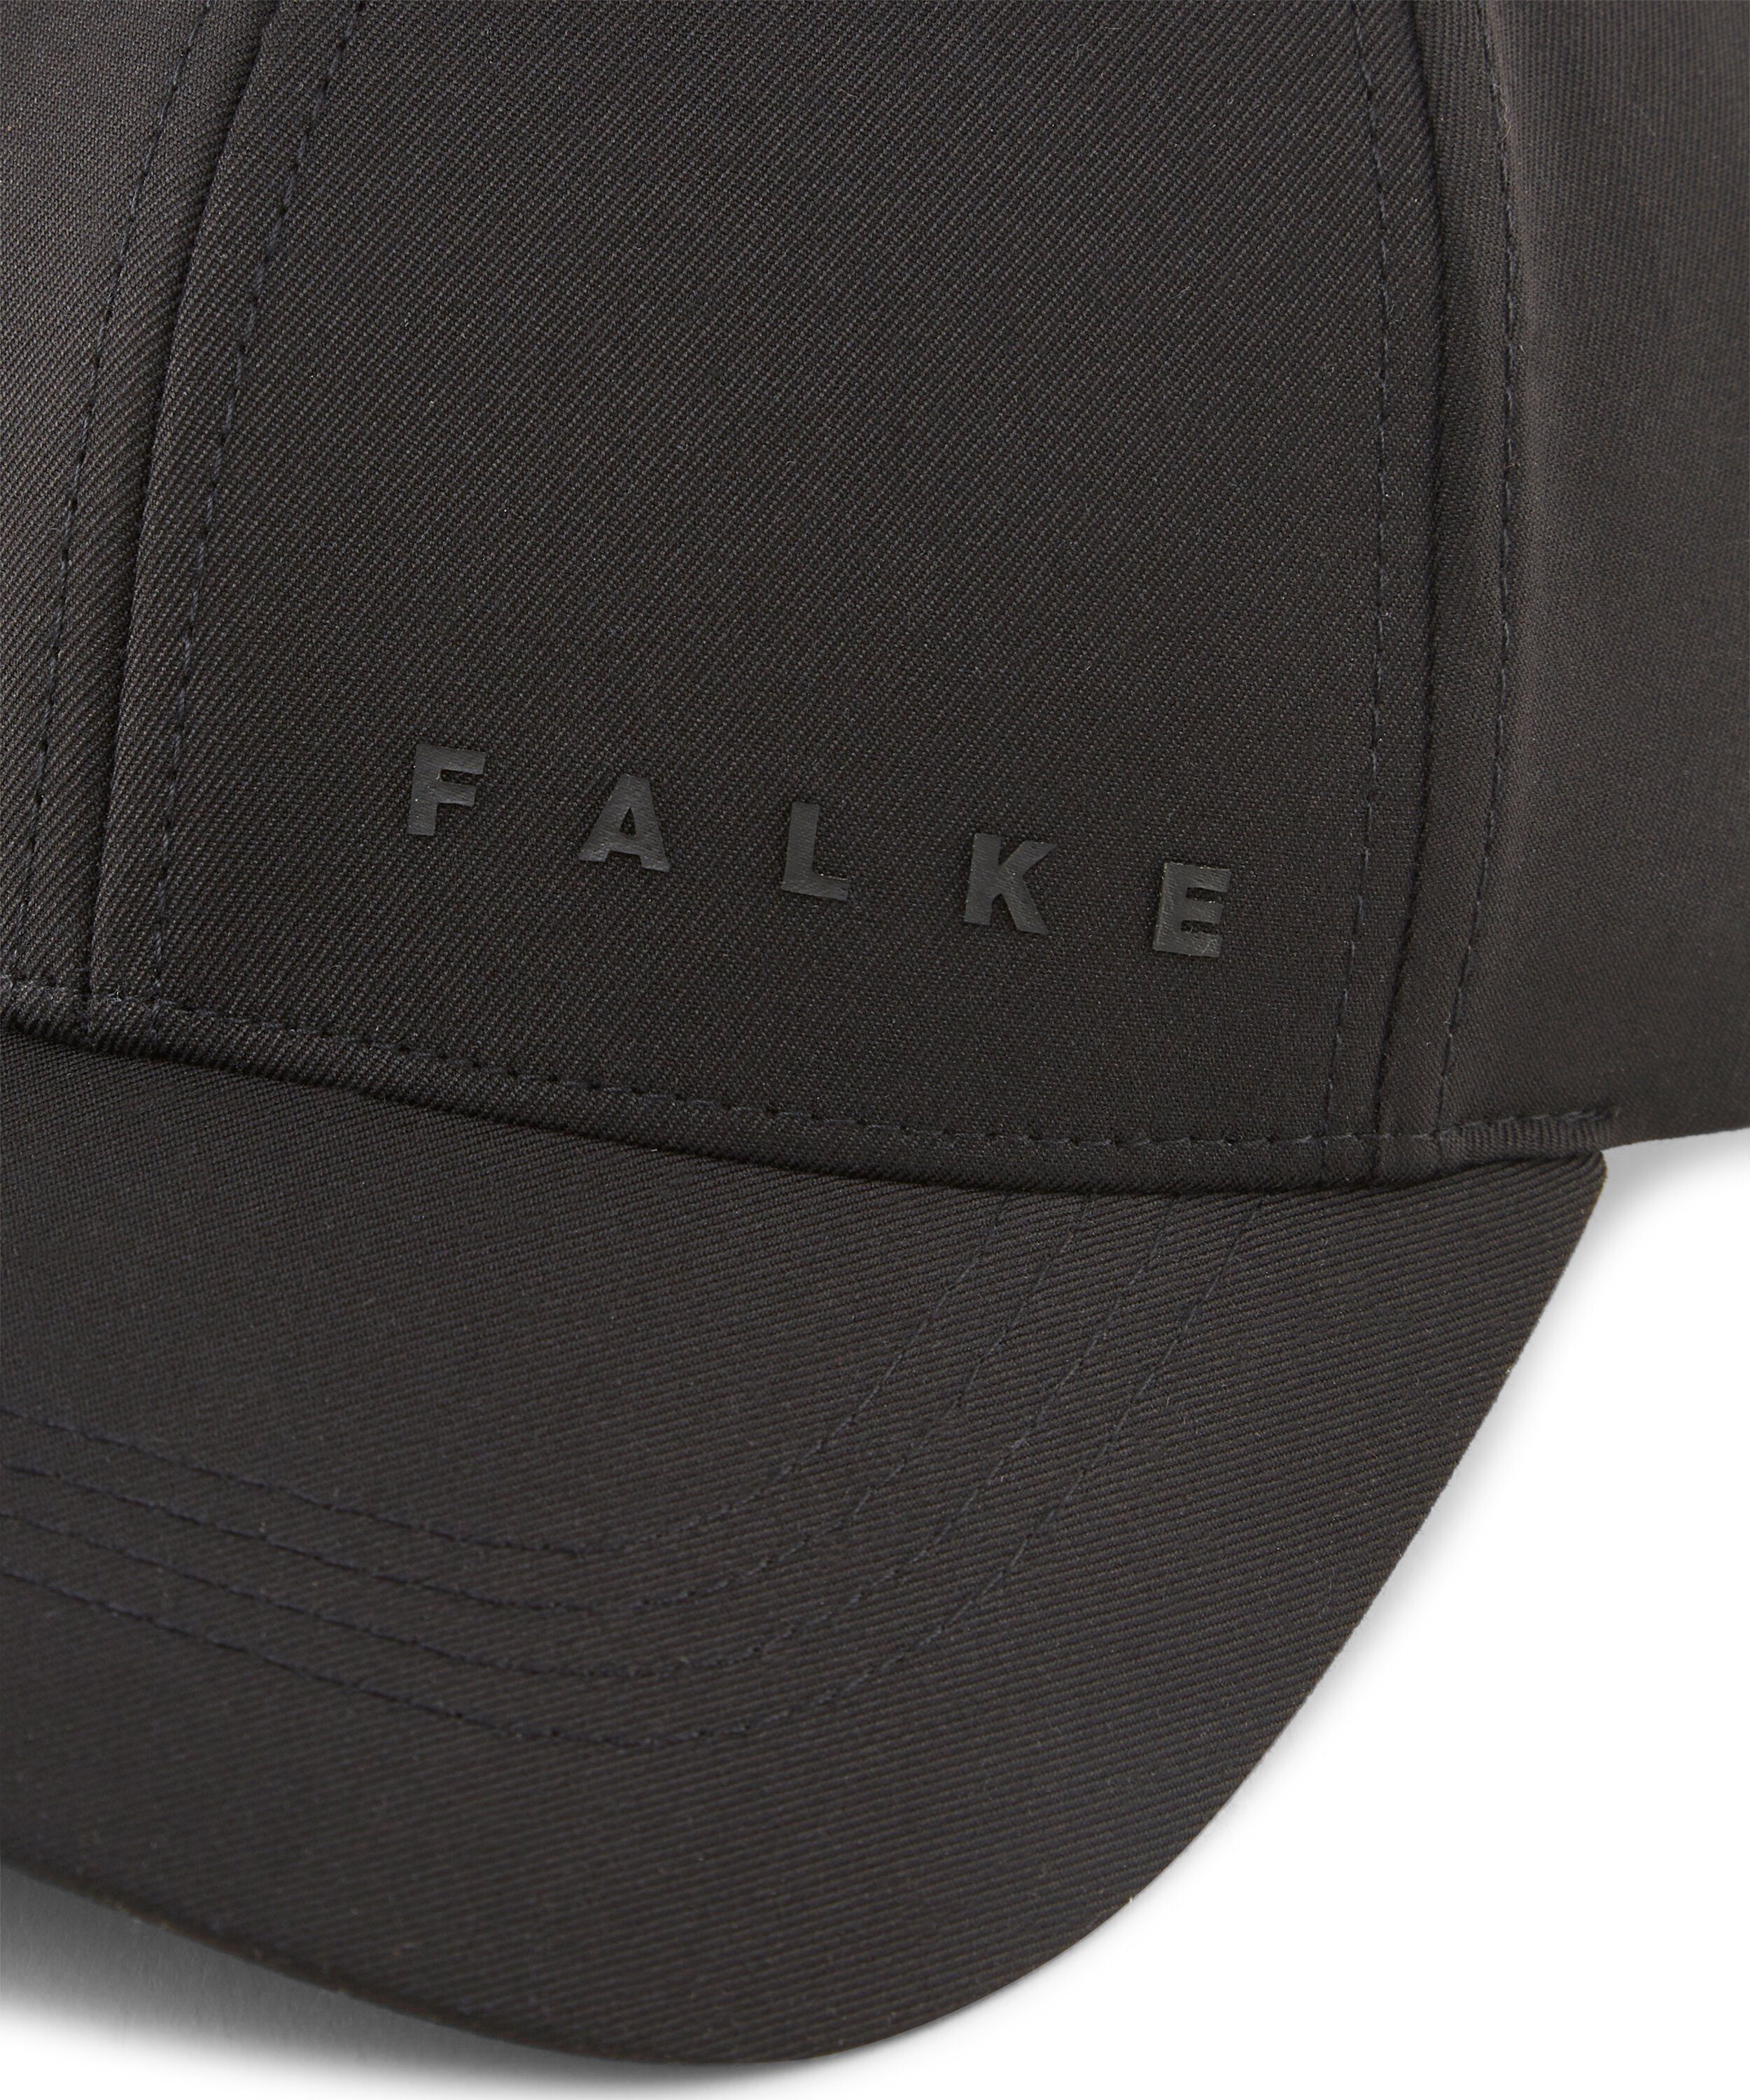 FALKE Baseball (3000) black Cap